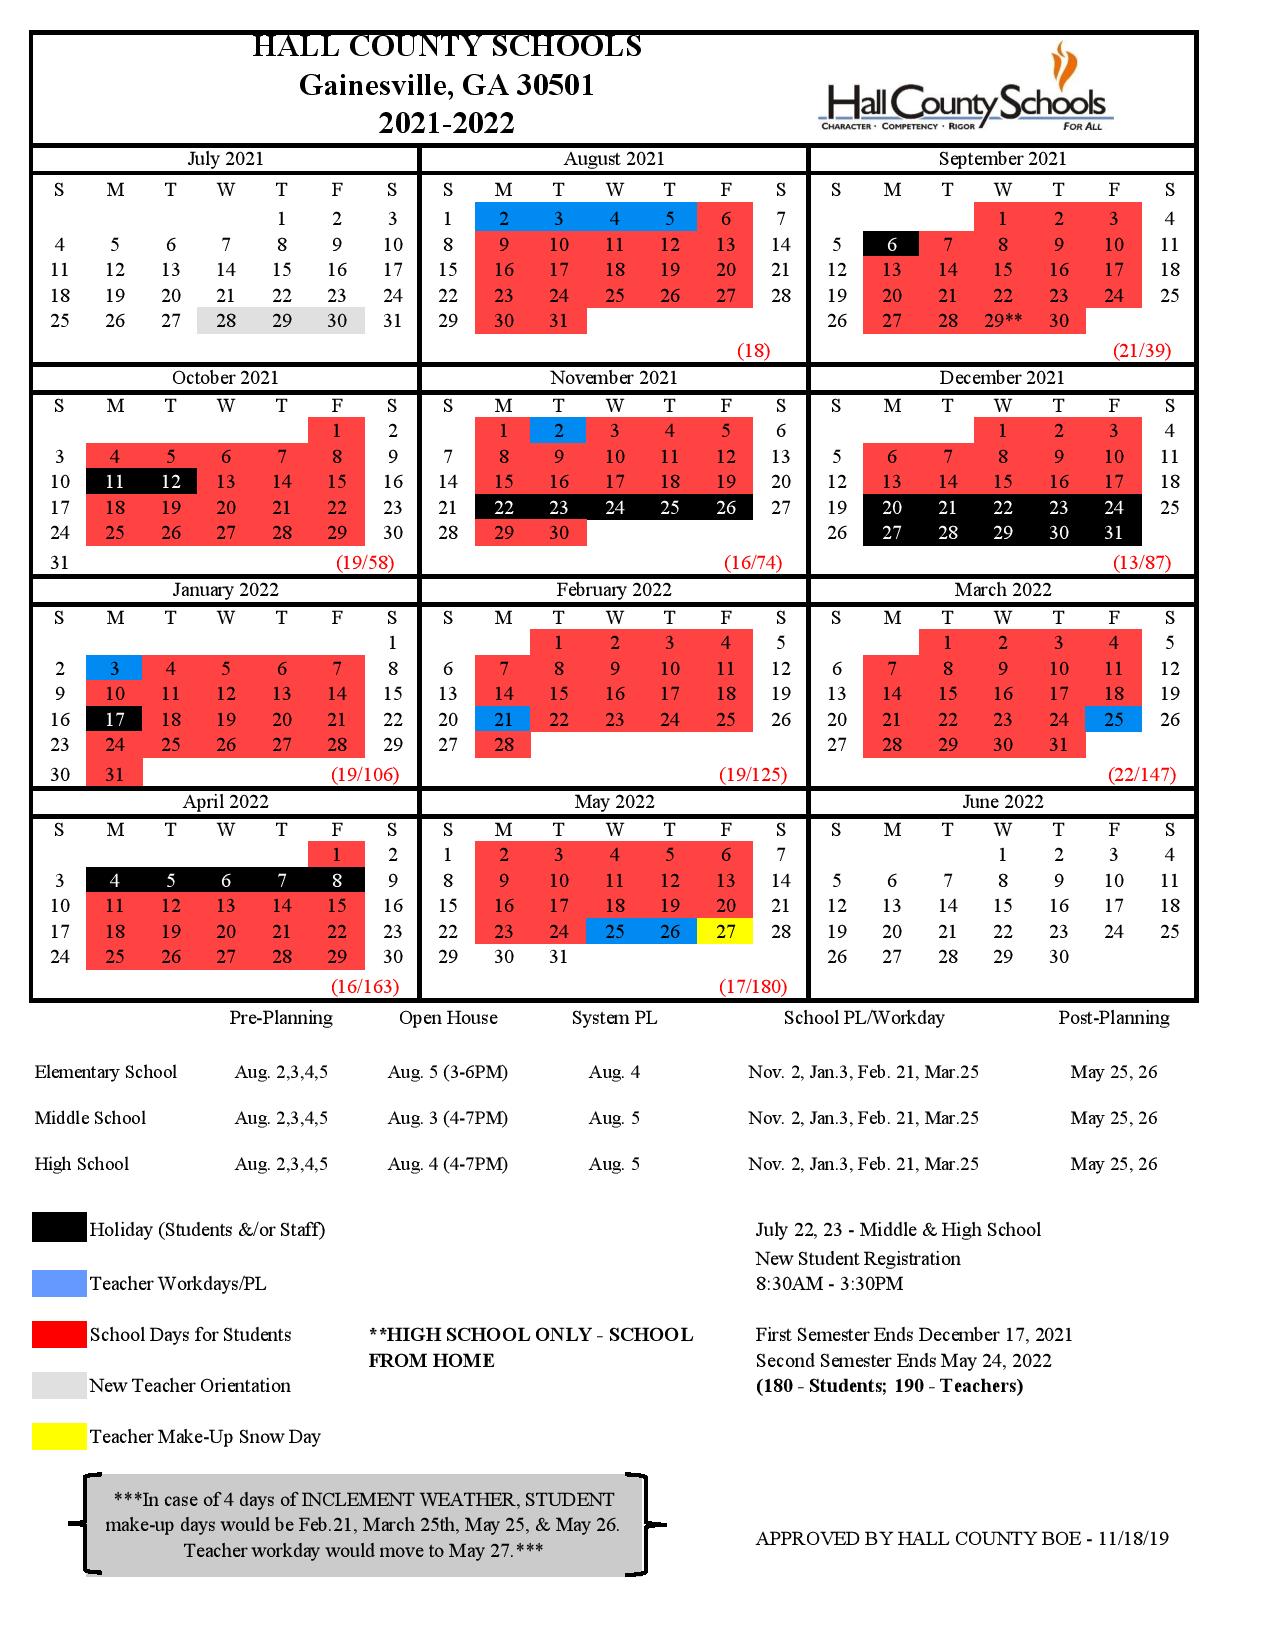 Hall County Schools Calendar 20212022 & Holidays